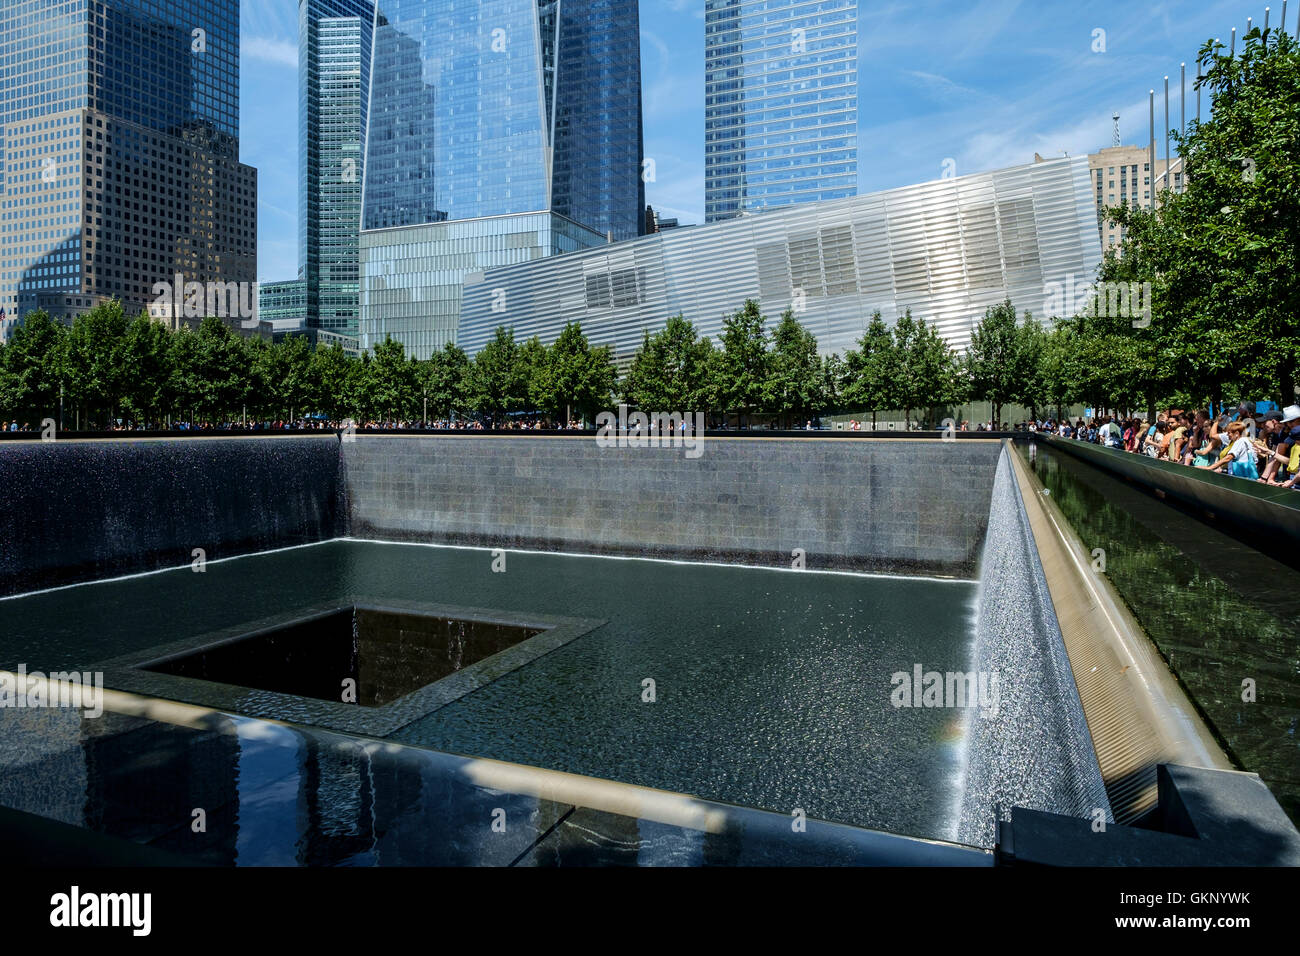 The South Pool of the 9/11 Memorial, Ground Zero, World Trade Center Stock Photo